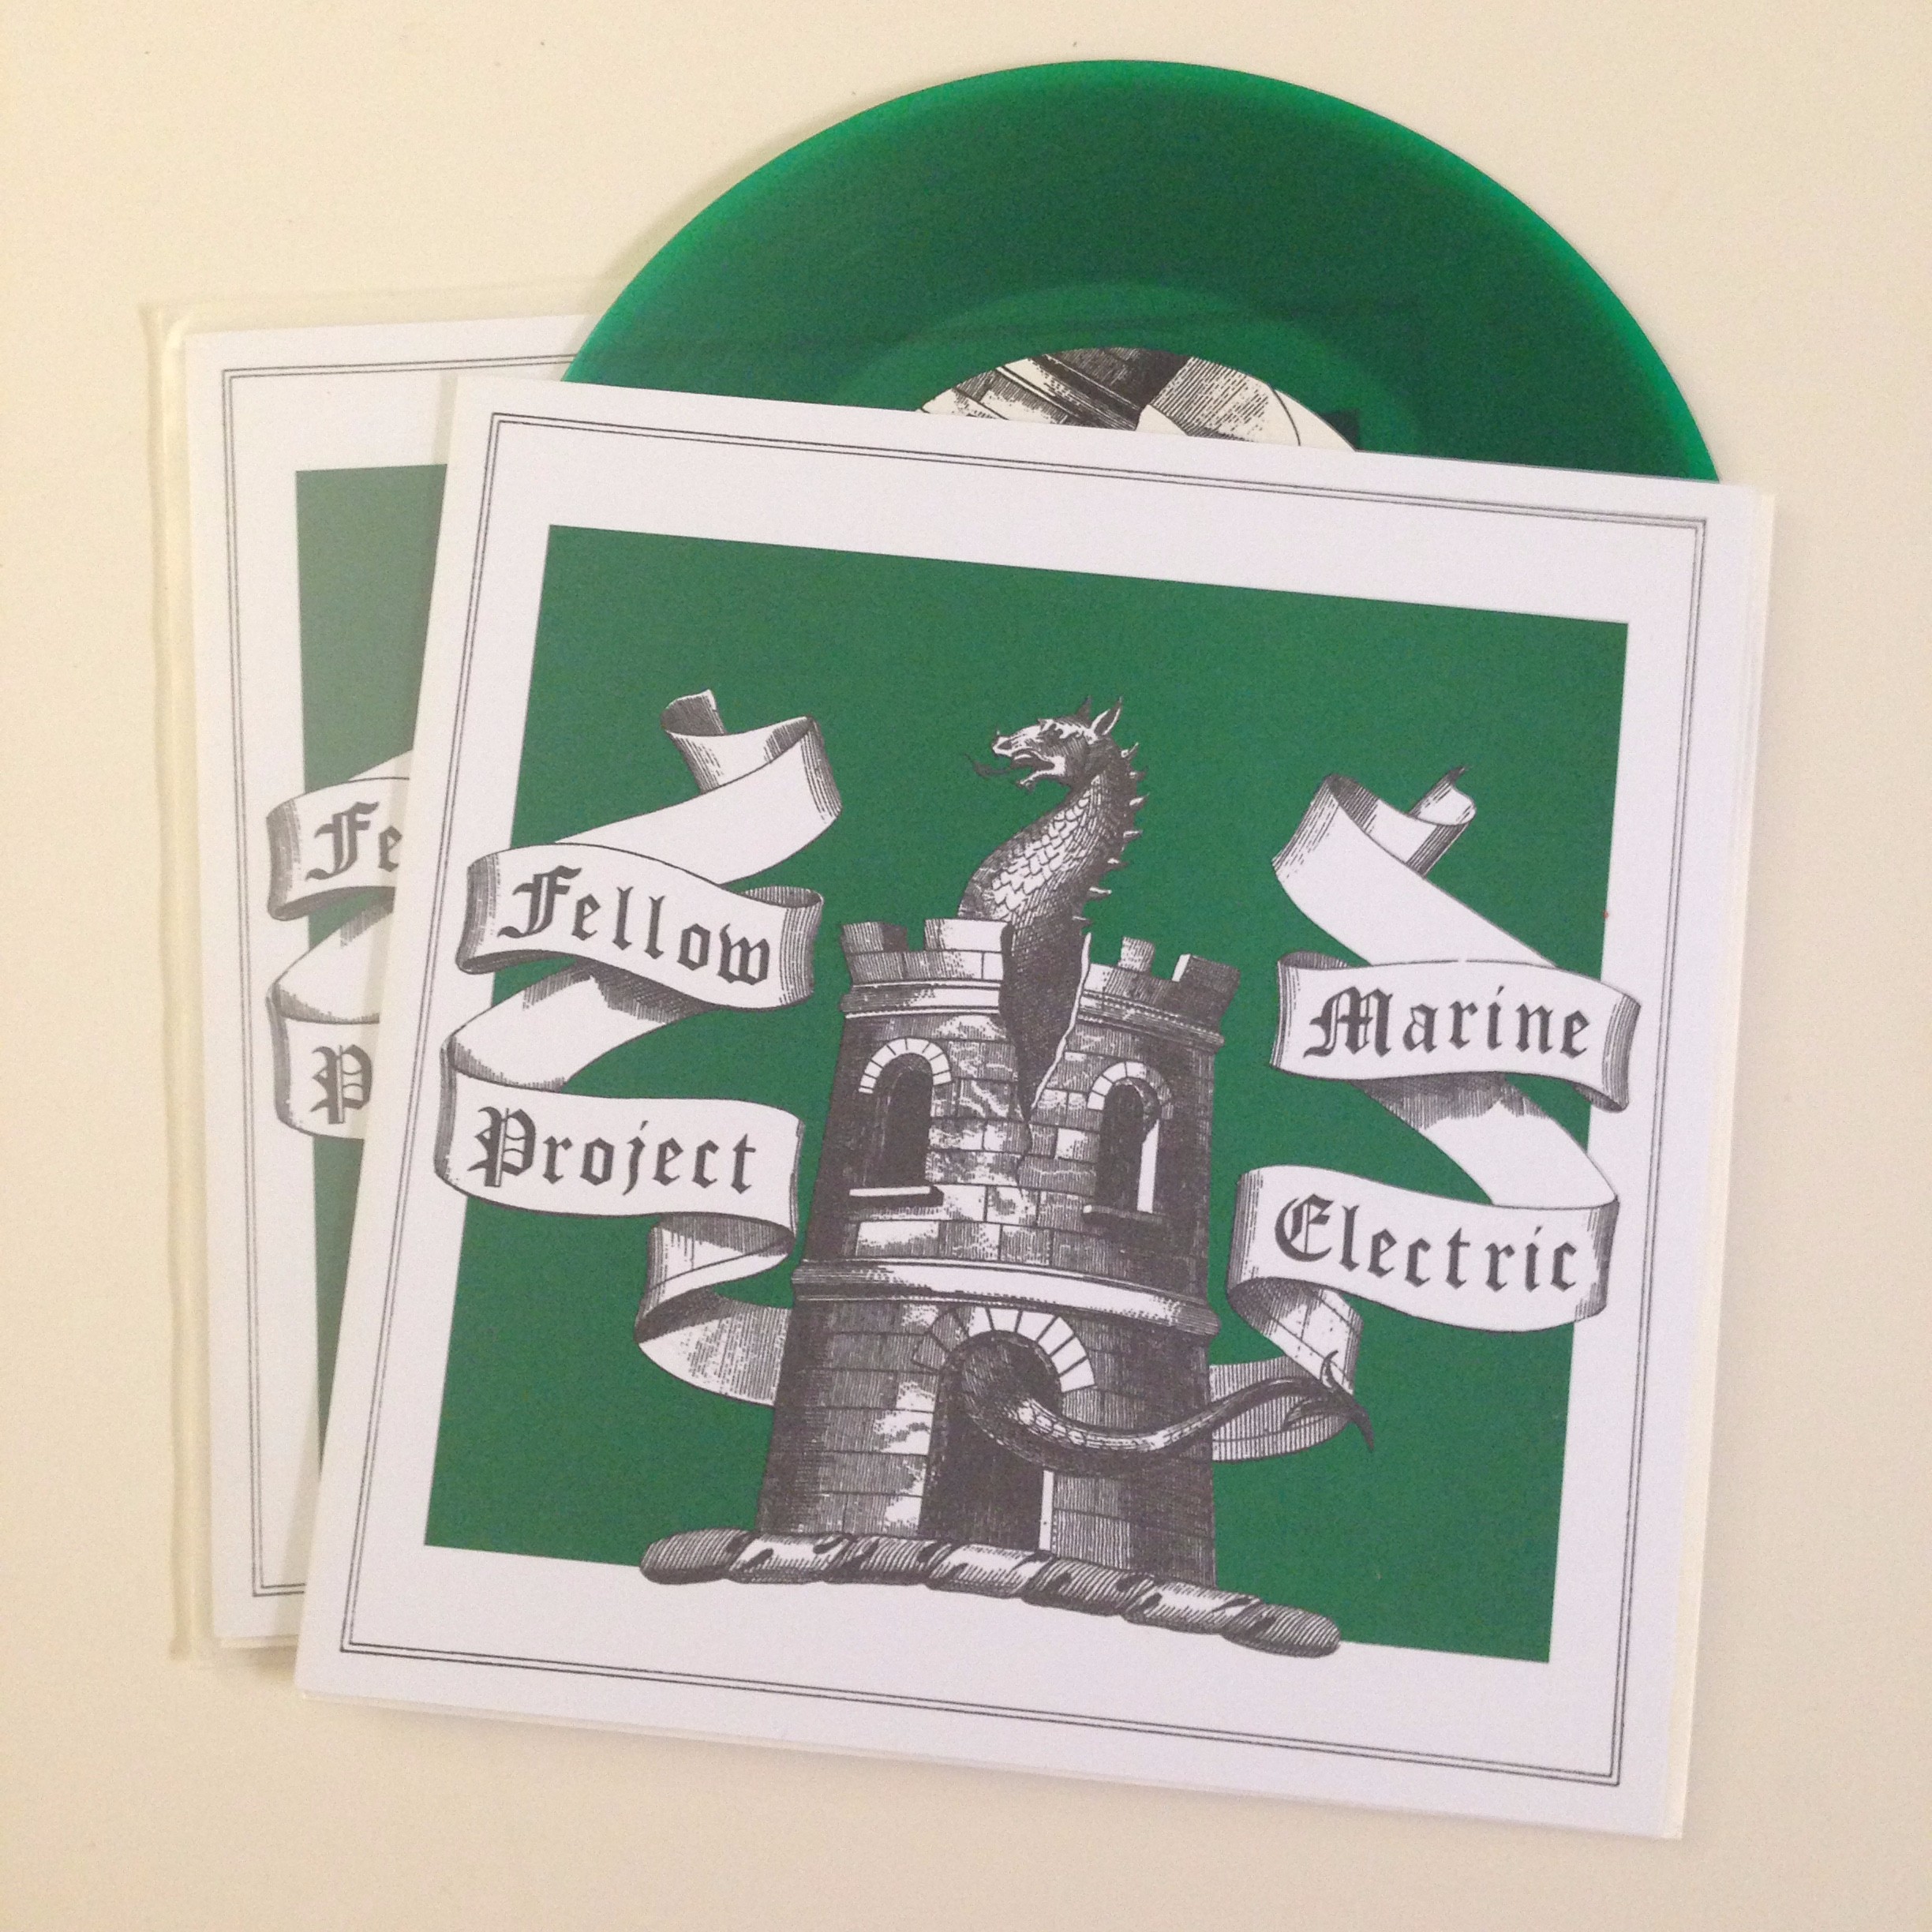 Fellow Project / Marine Electric split 7" (green vinyl)